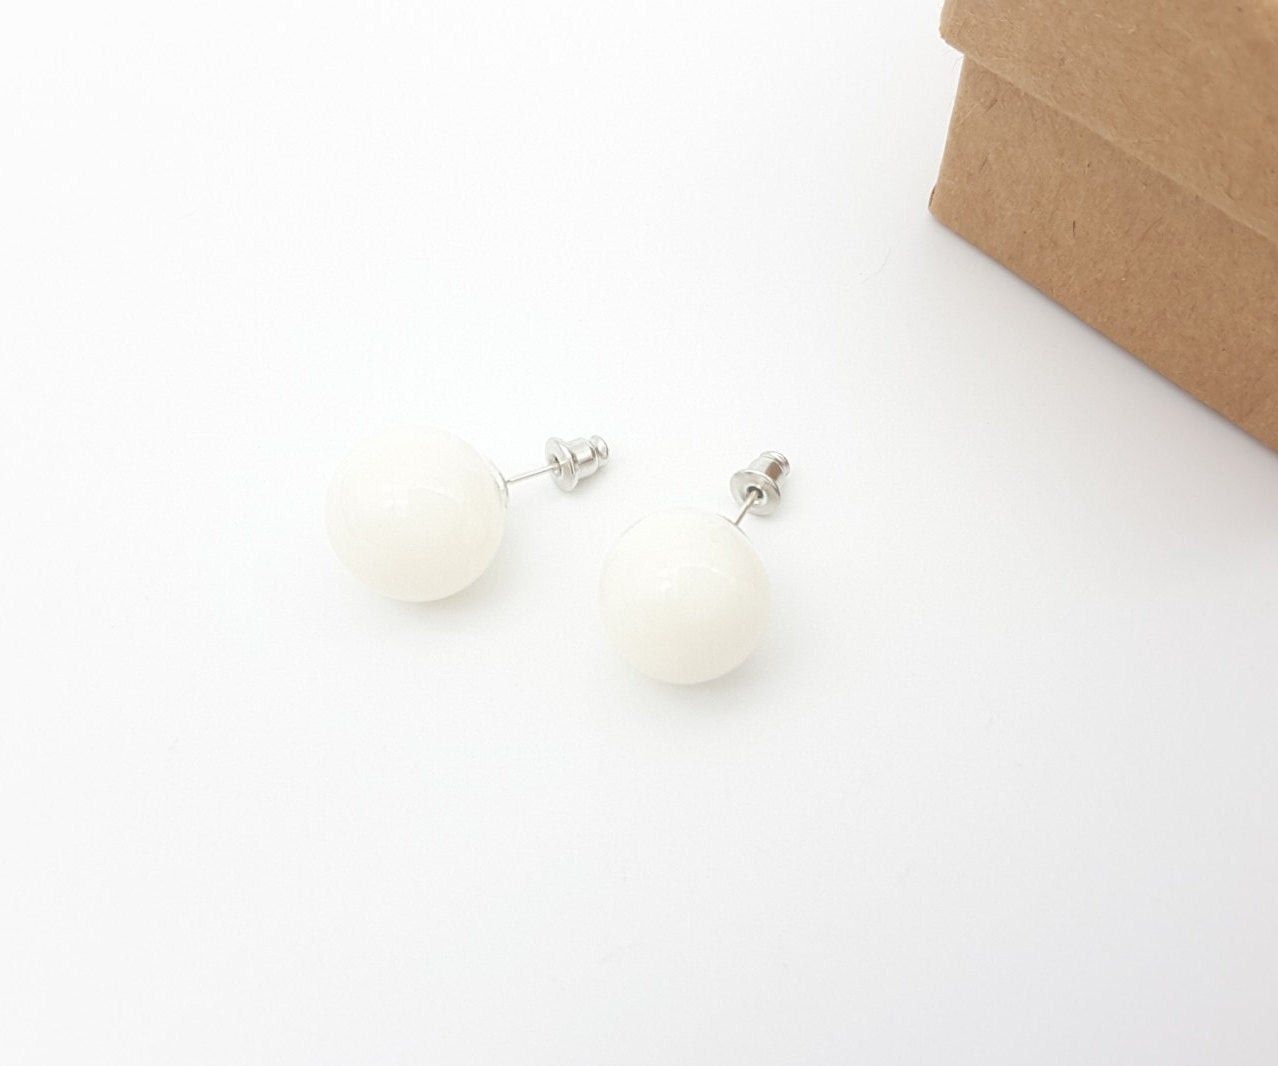 Best ideas about DIY Breastmilk Jewelry
. Save or Pin DIY Breast Milk Jewelry Keepsake Kit 8mm by Now.